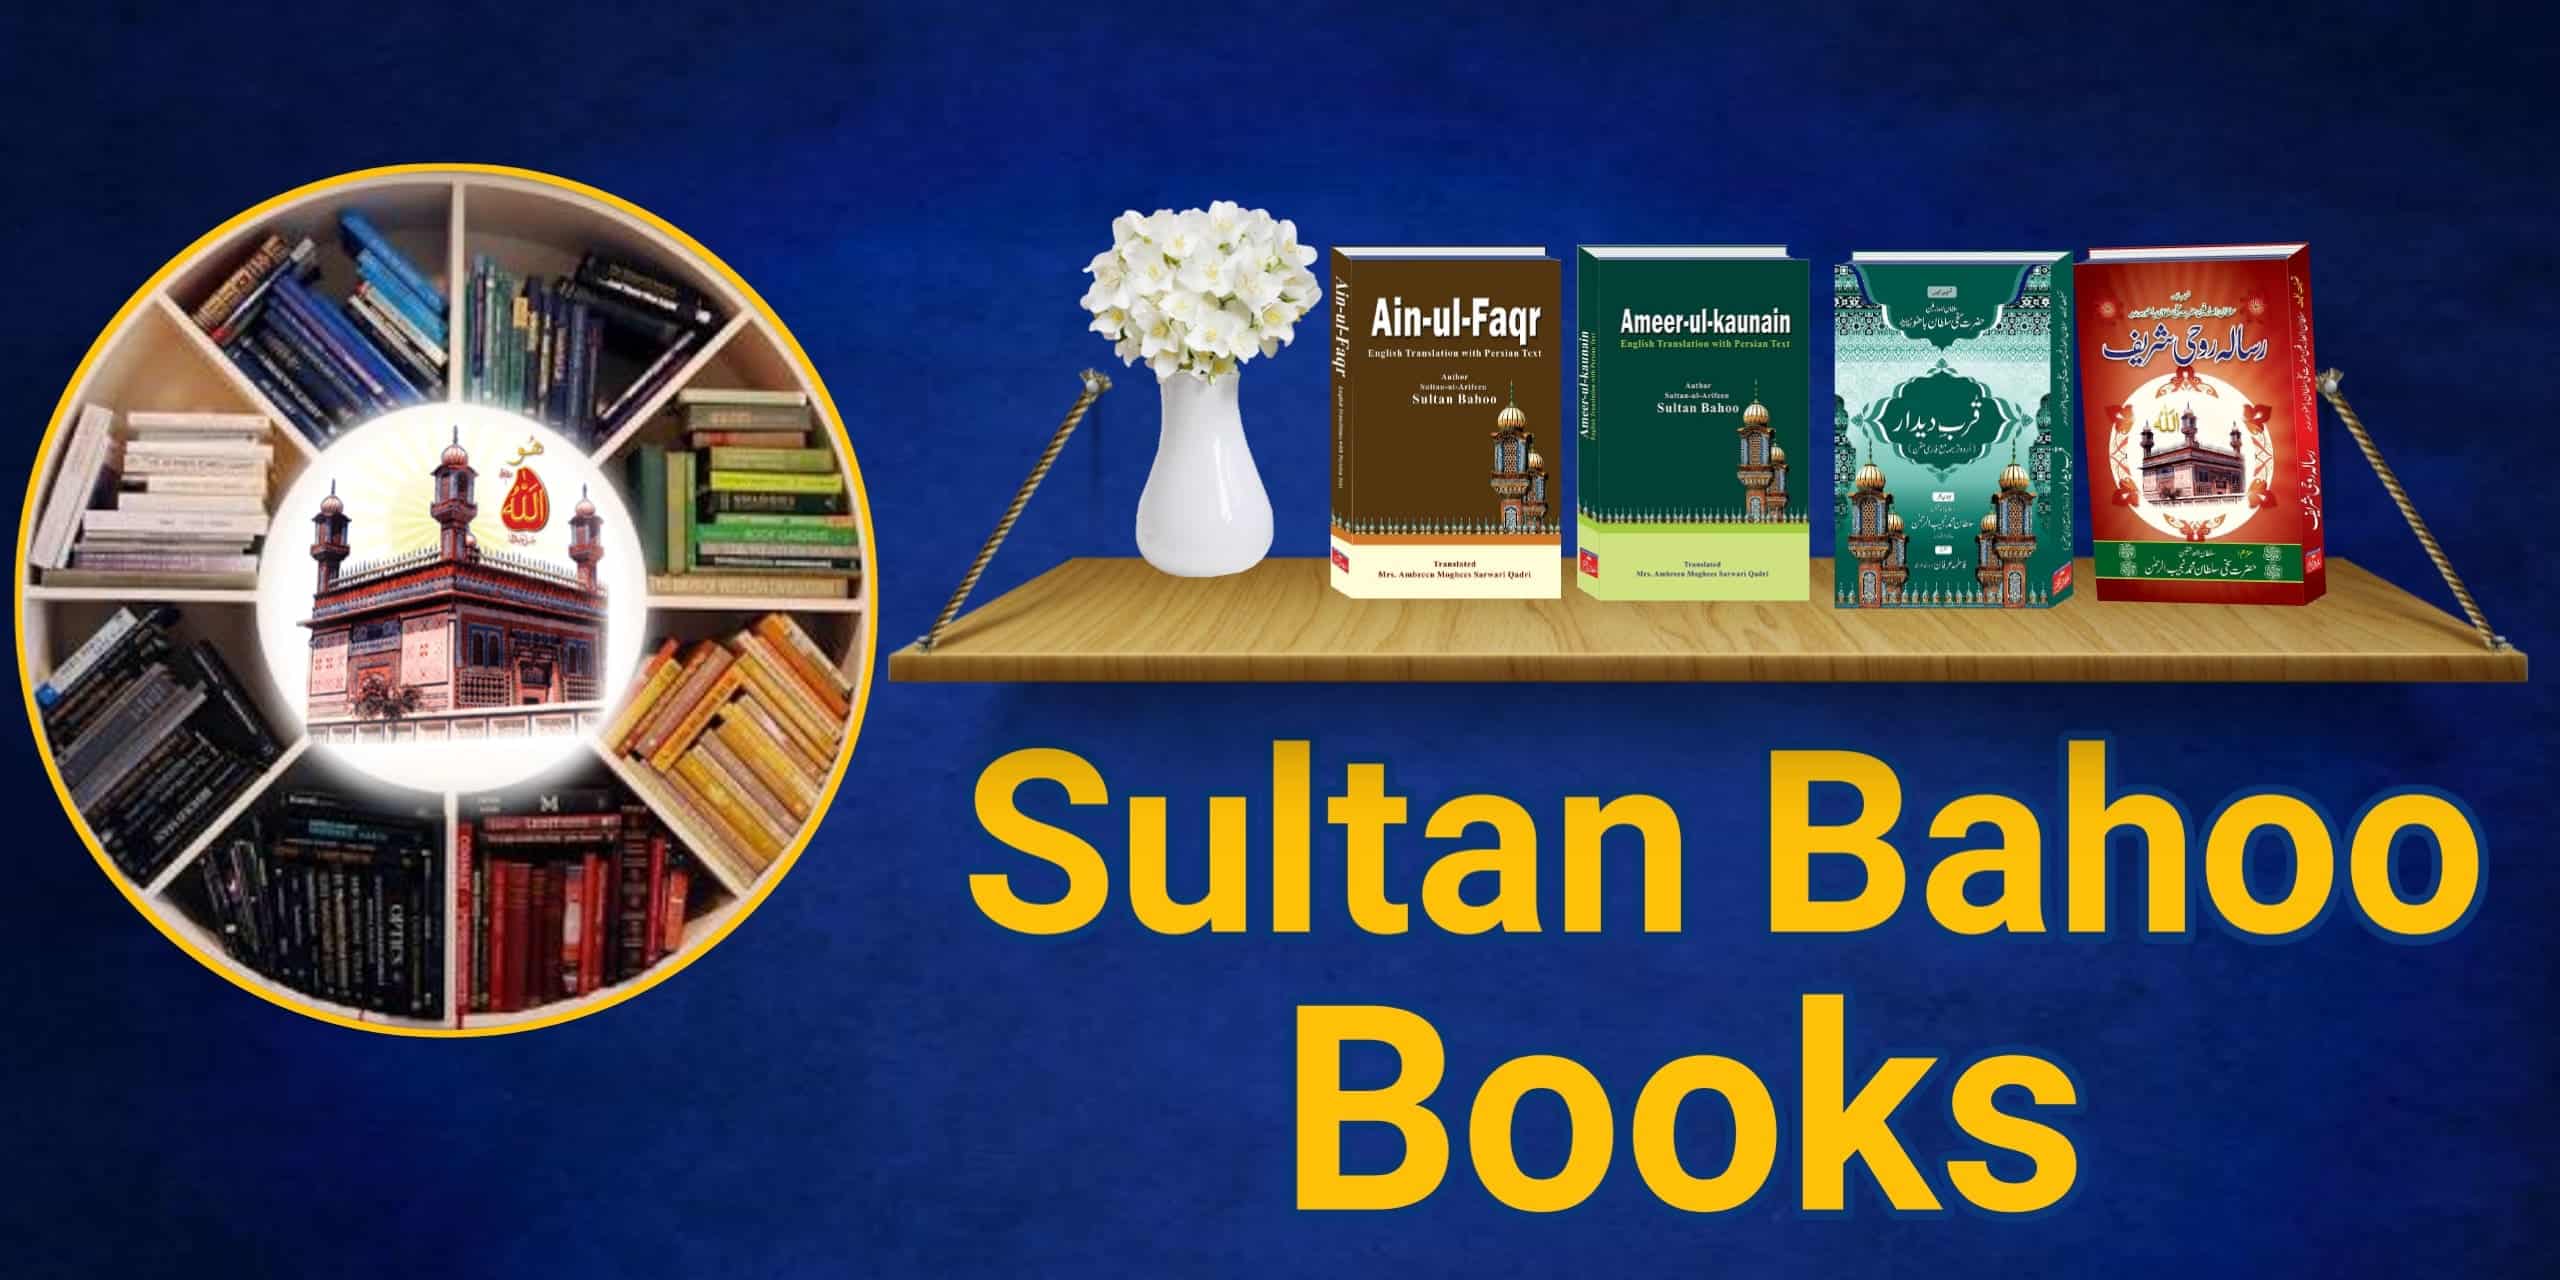 Sultan Bahoo Books